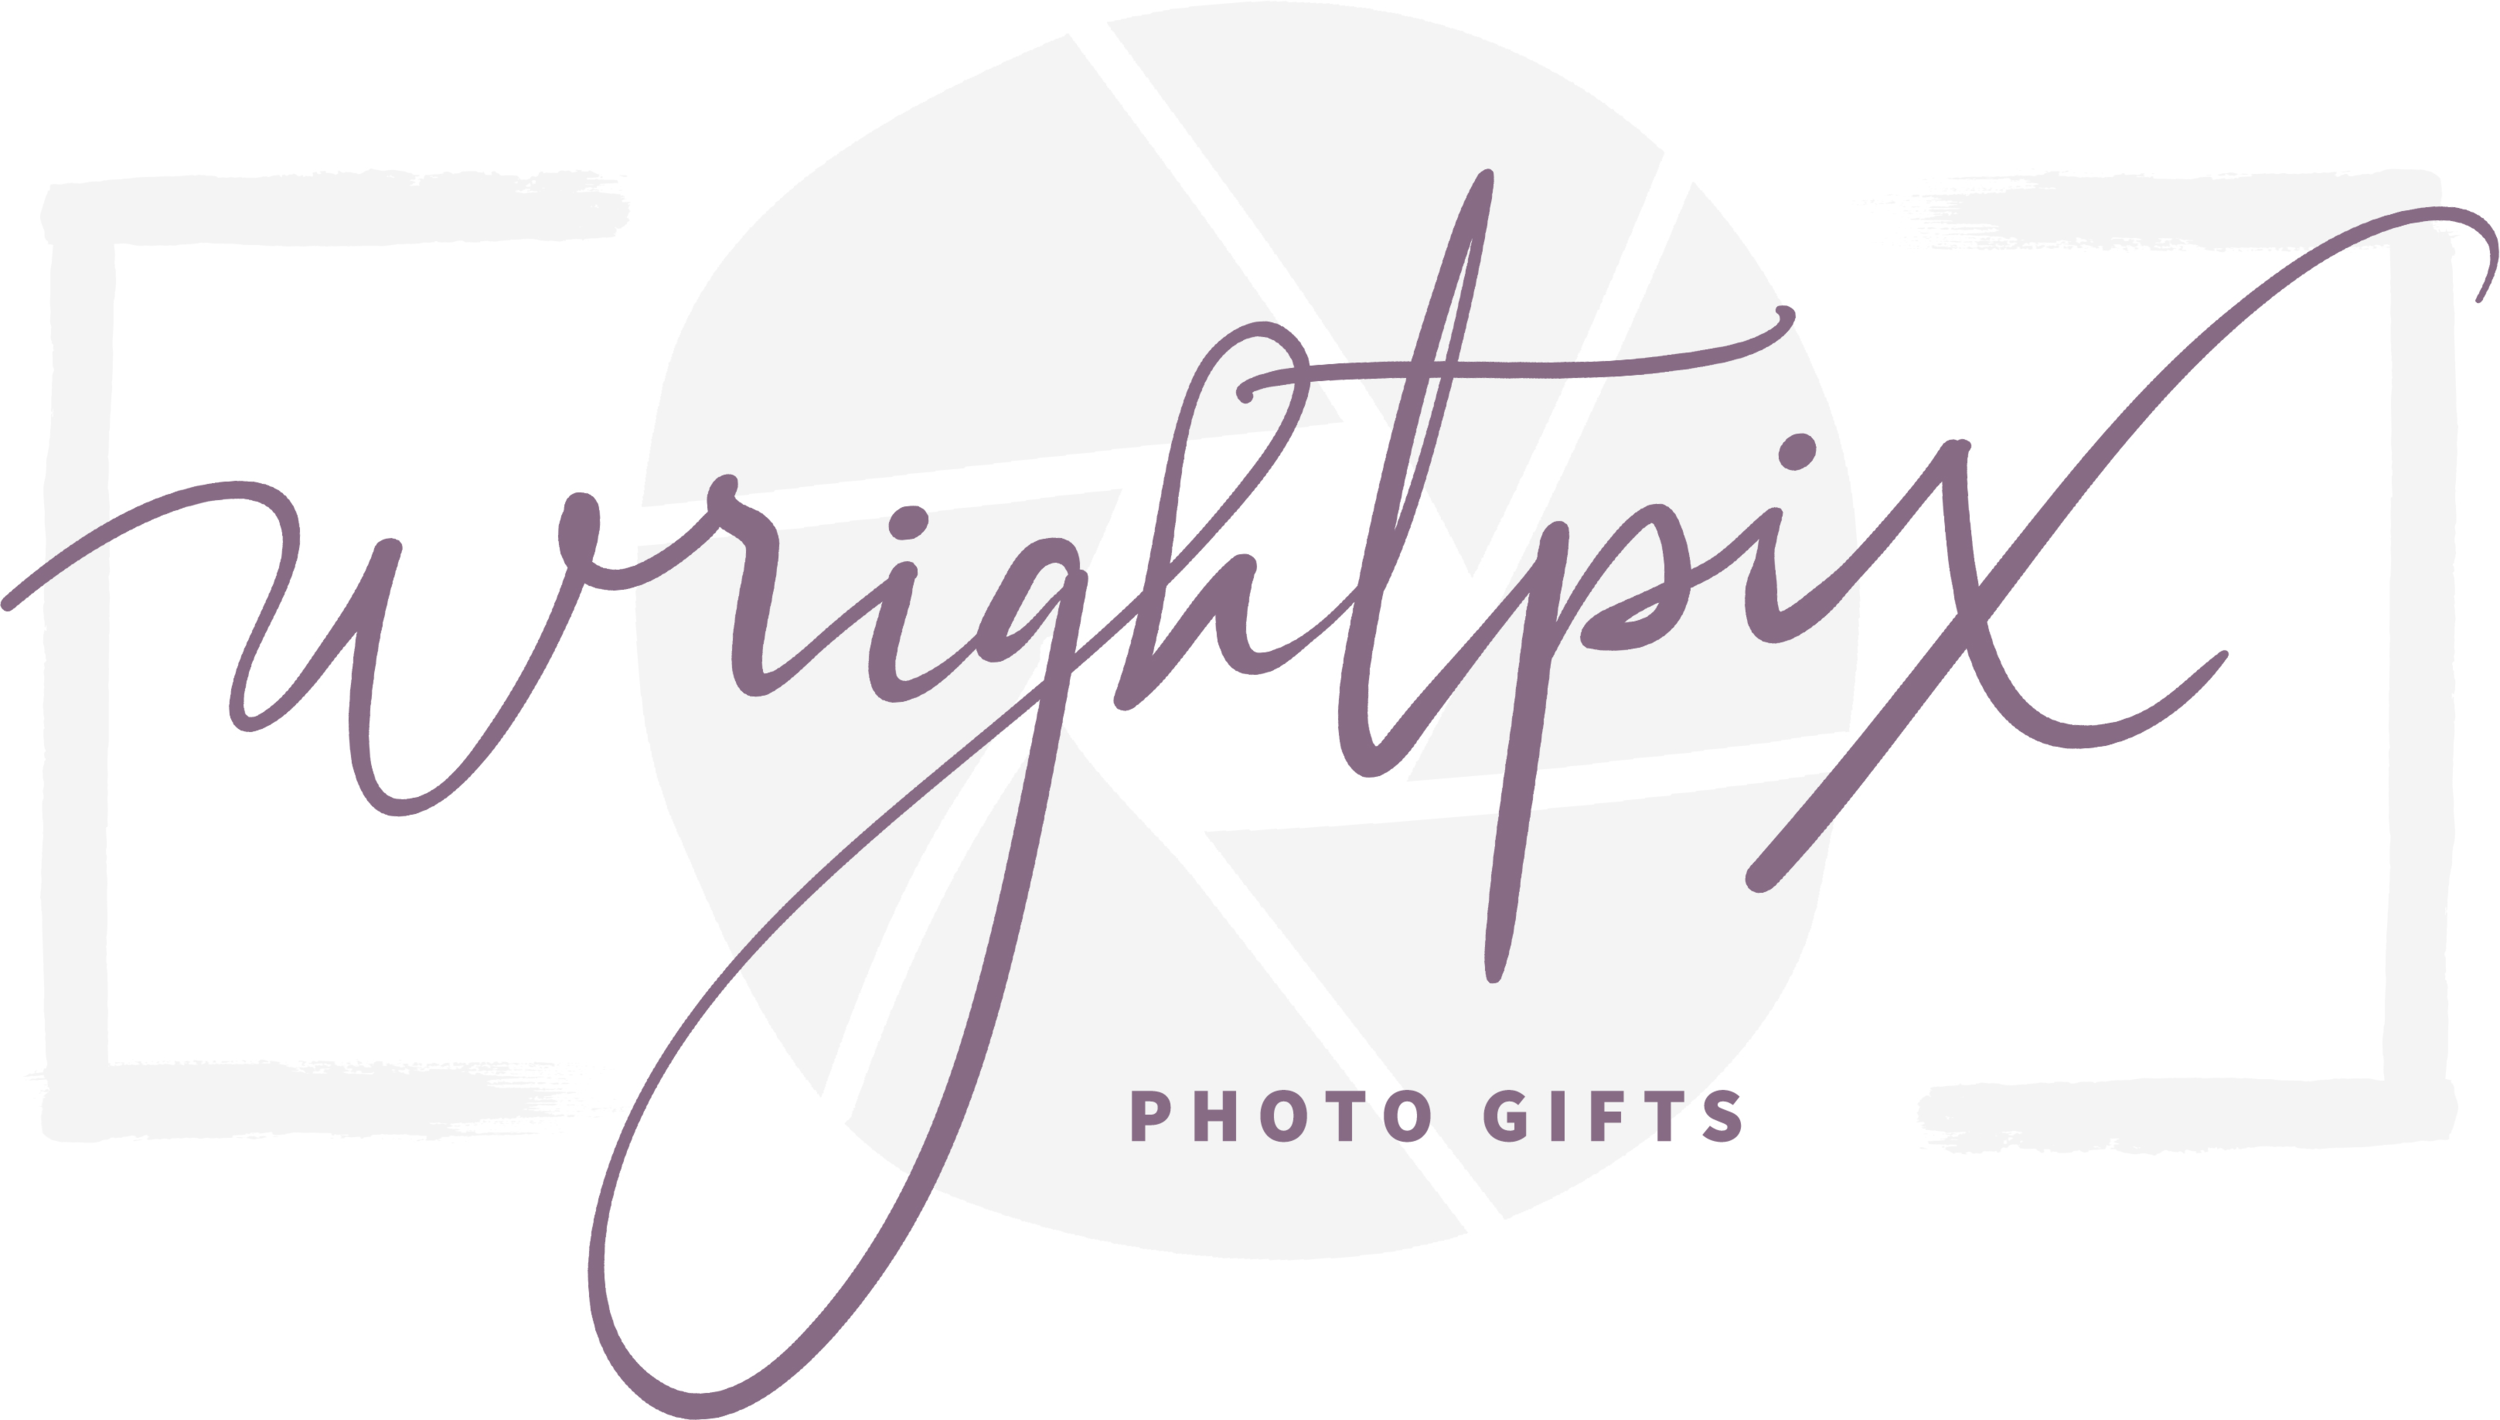 wrightpix photo gifts